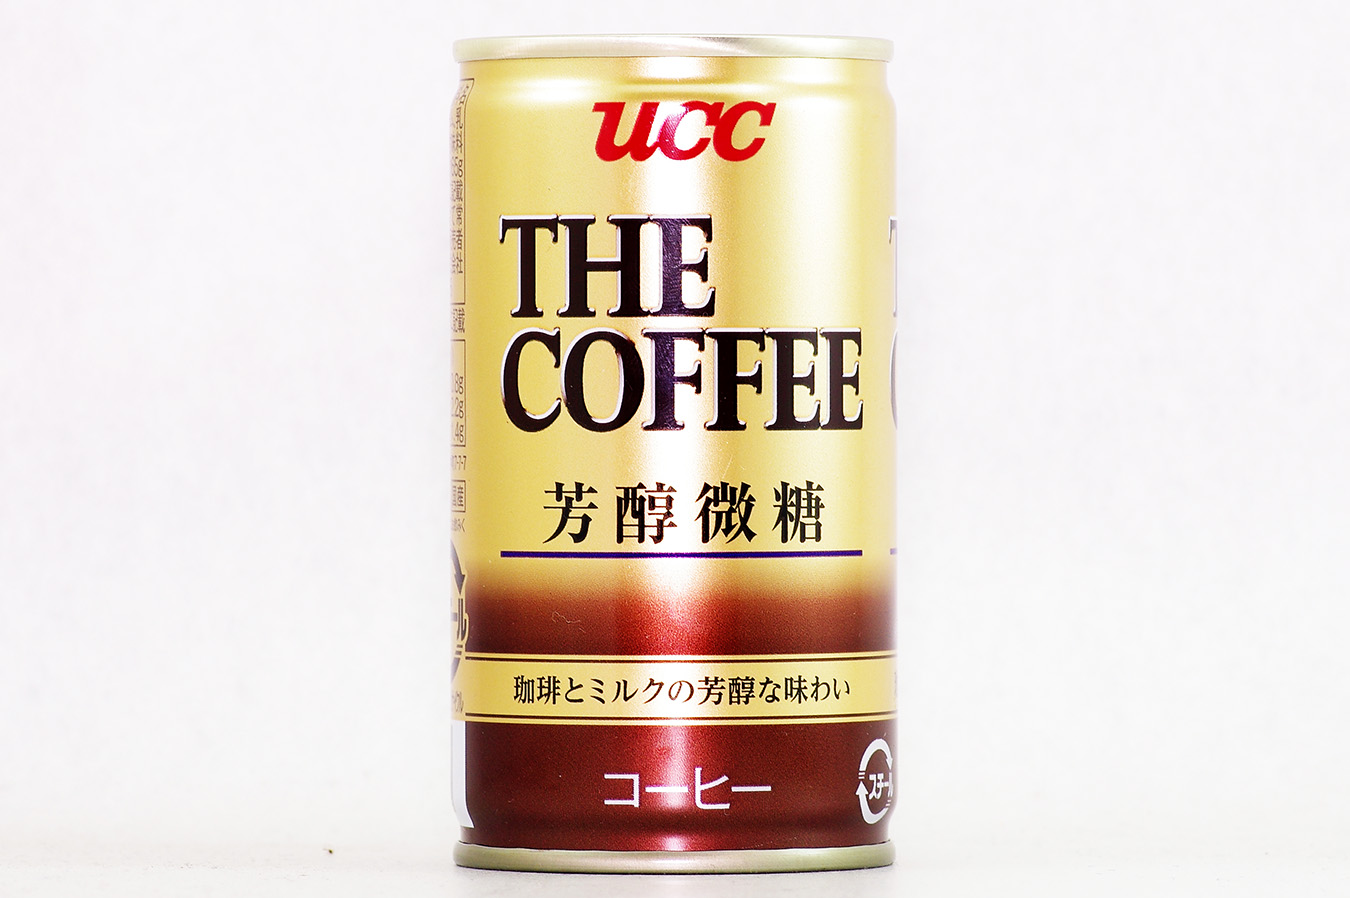 UCC THE COFFEE 芳醇微糖 2016年6月